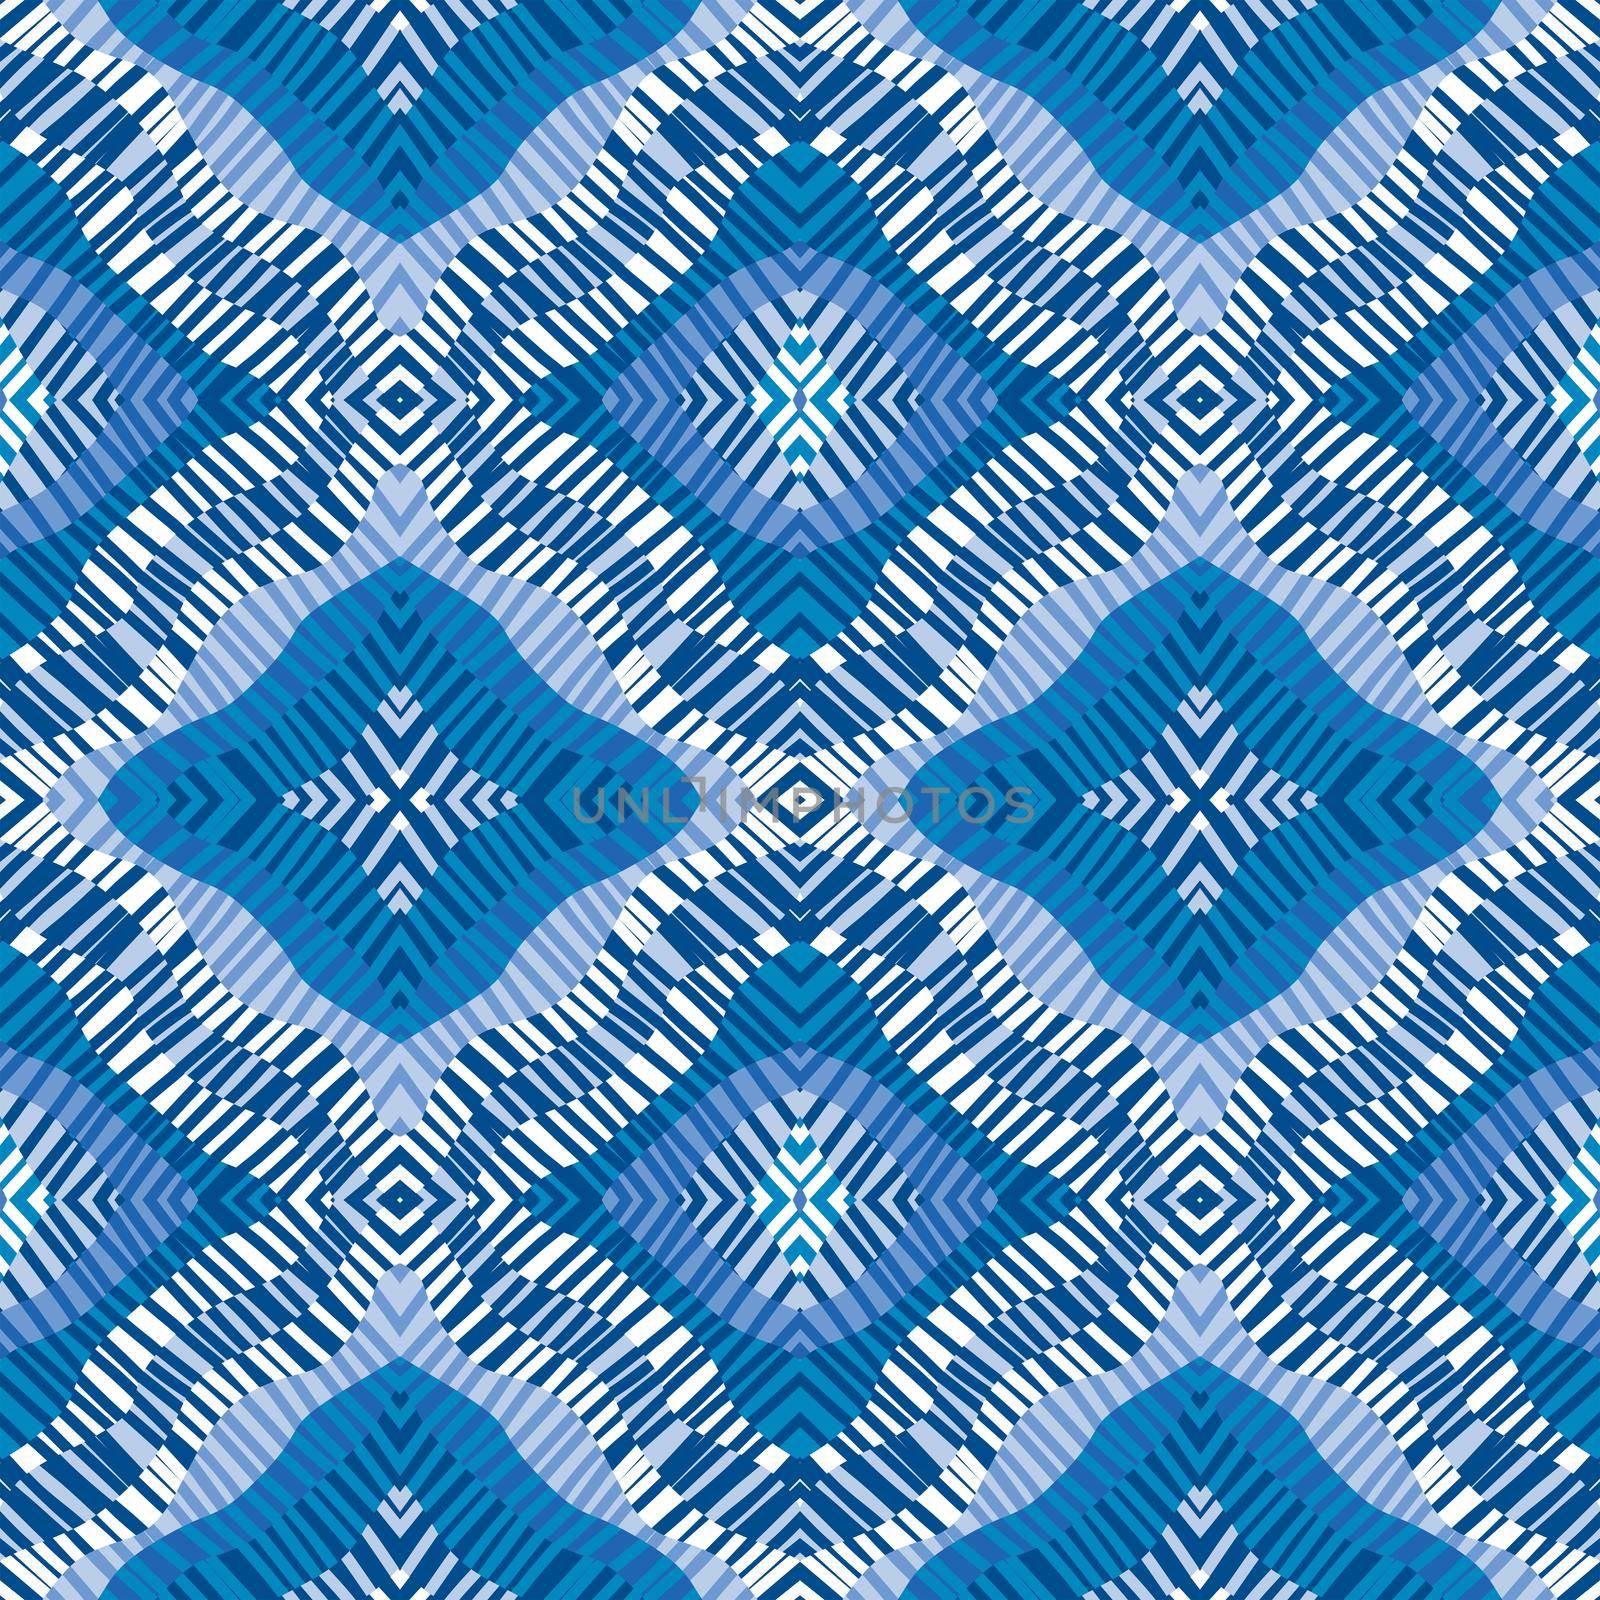 Blue striped pattern in geometrical shapes